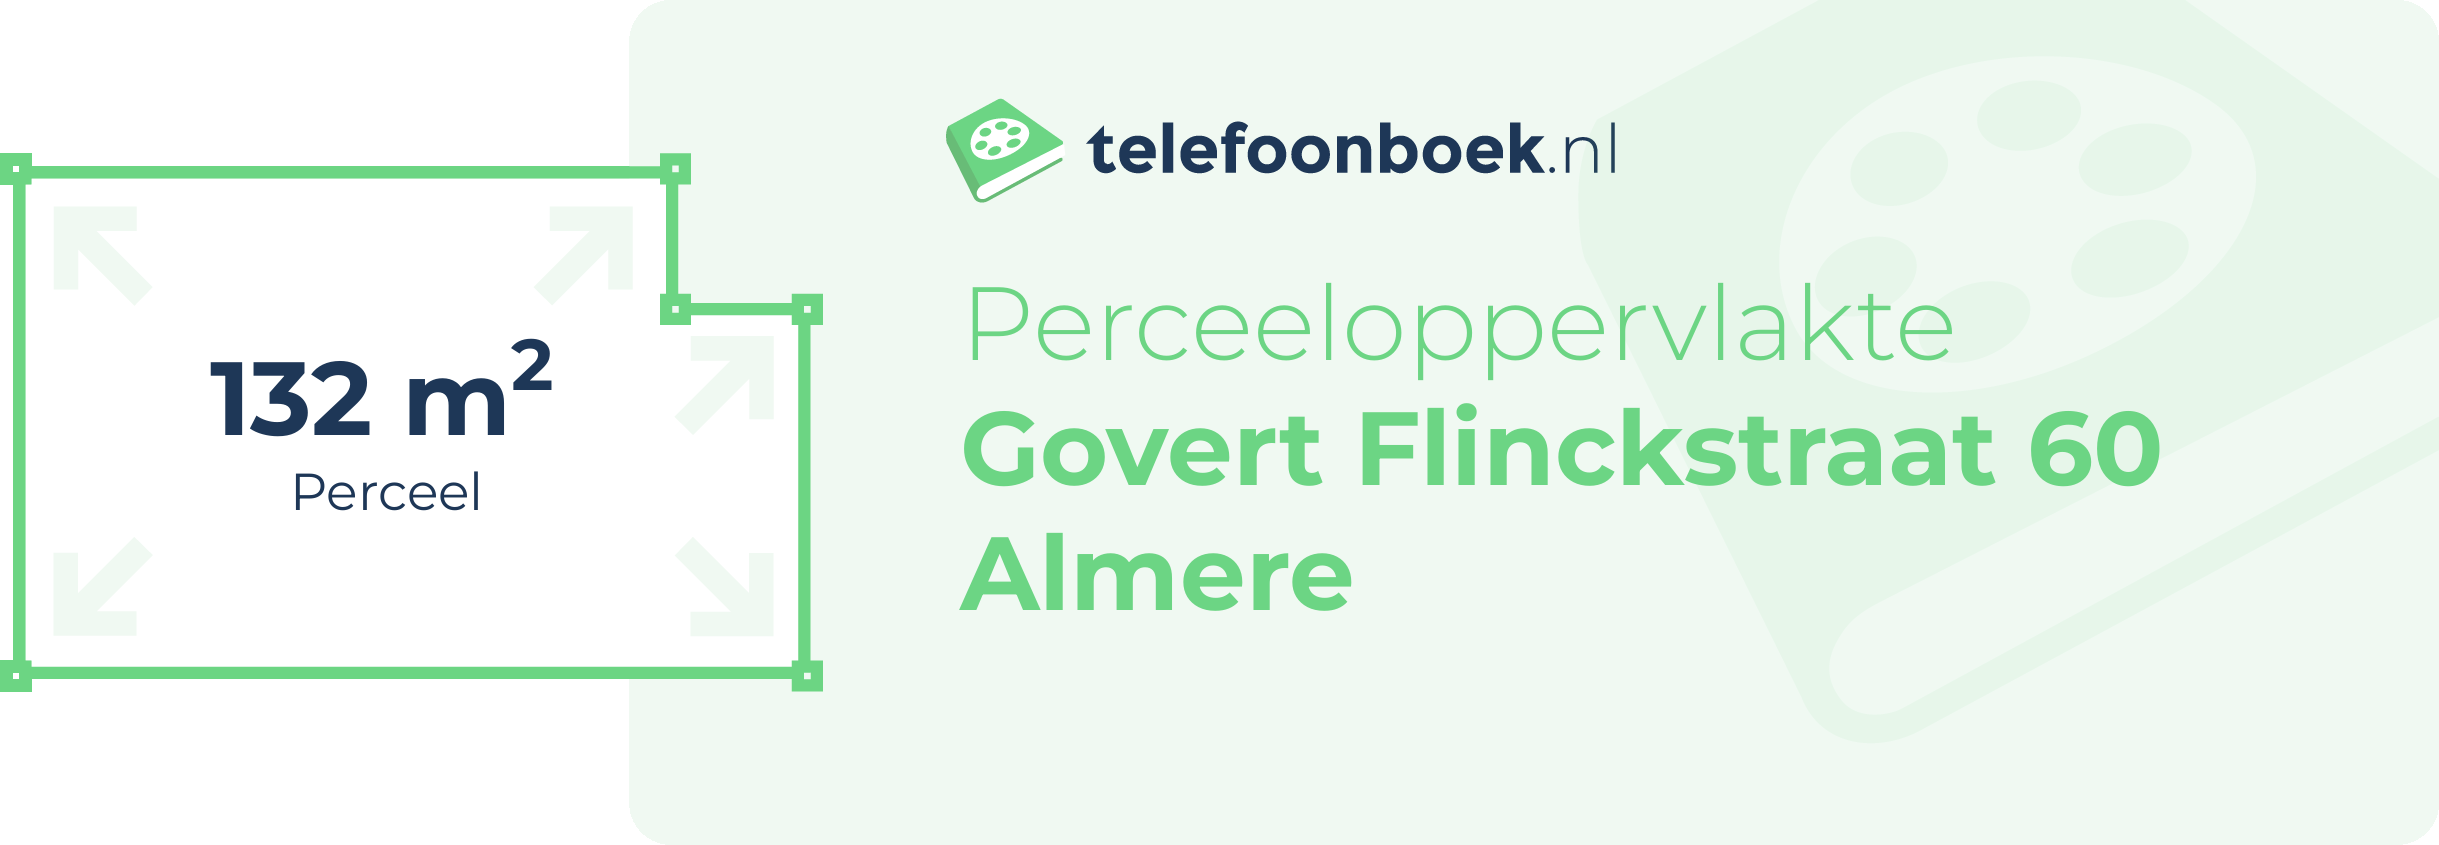 Perceeloppervlakte Govert Flinckstraat 60 Almere